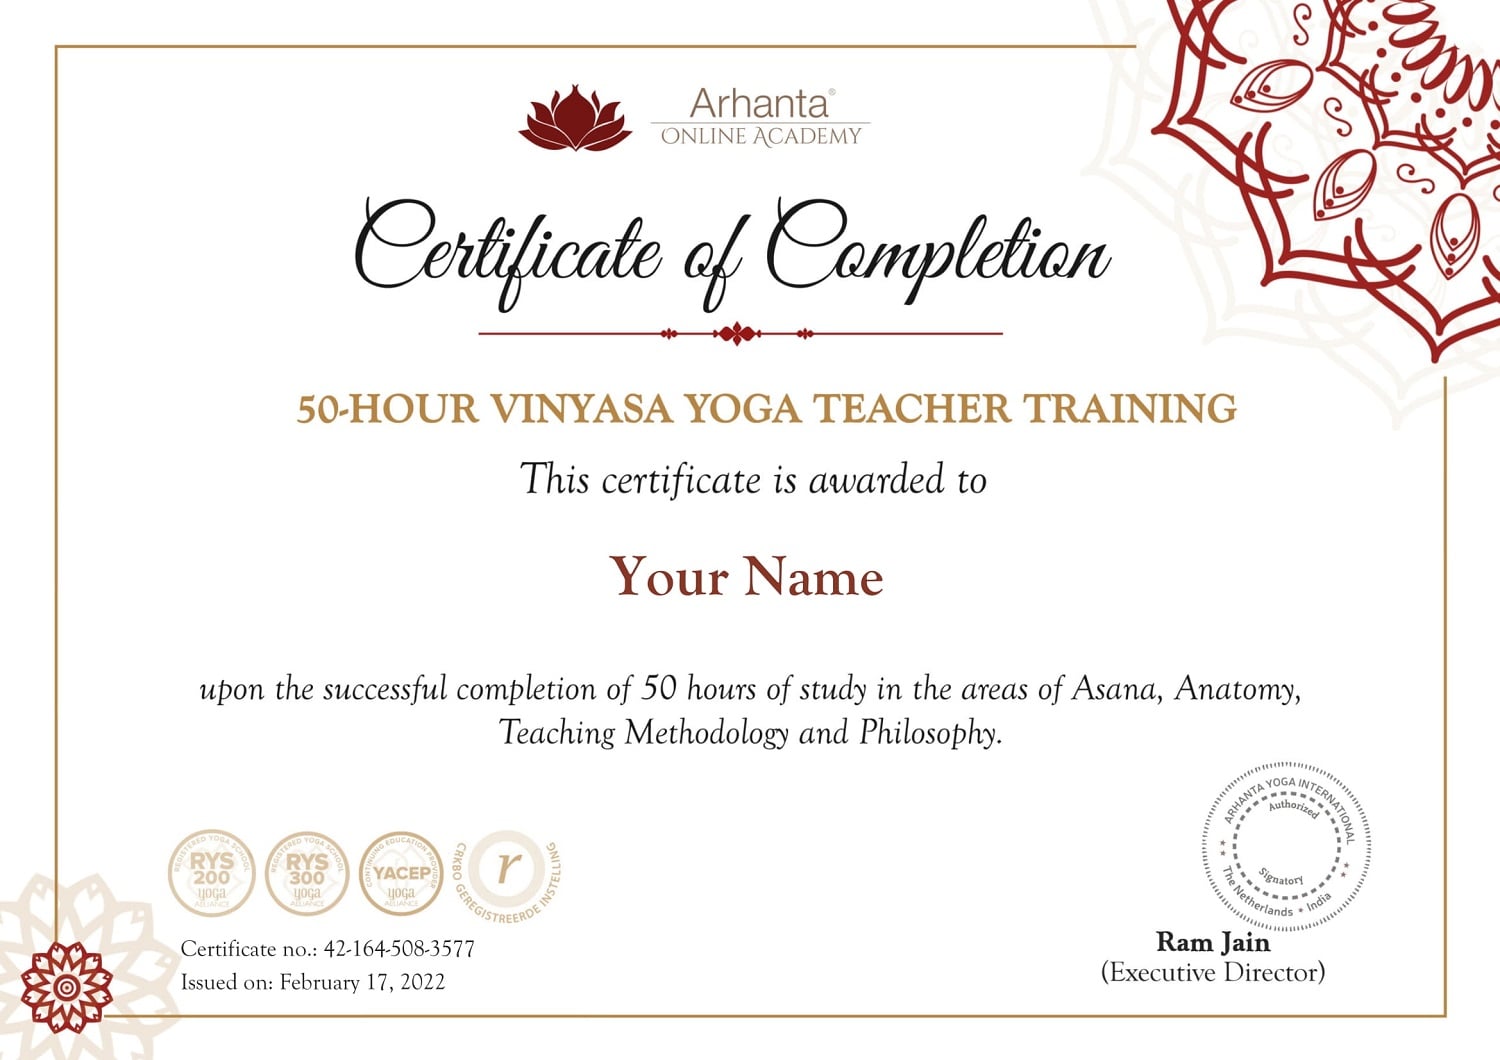 Vinyasa yoga teacher training certificate